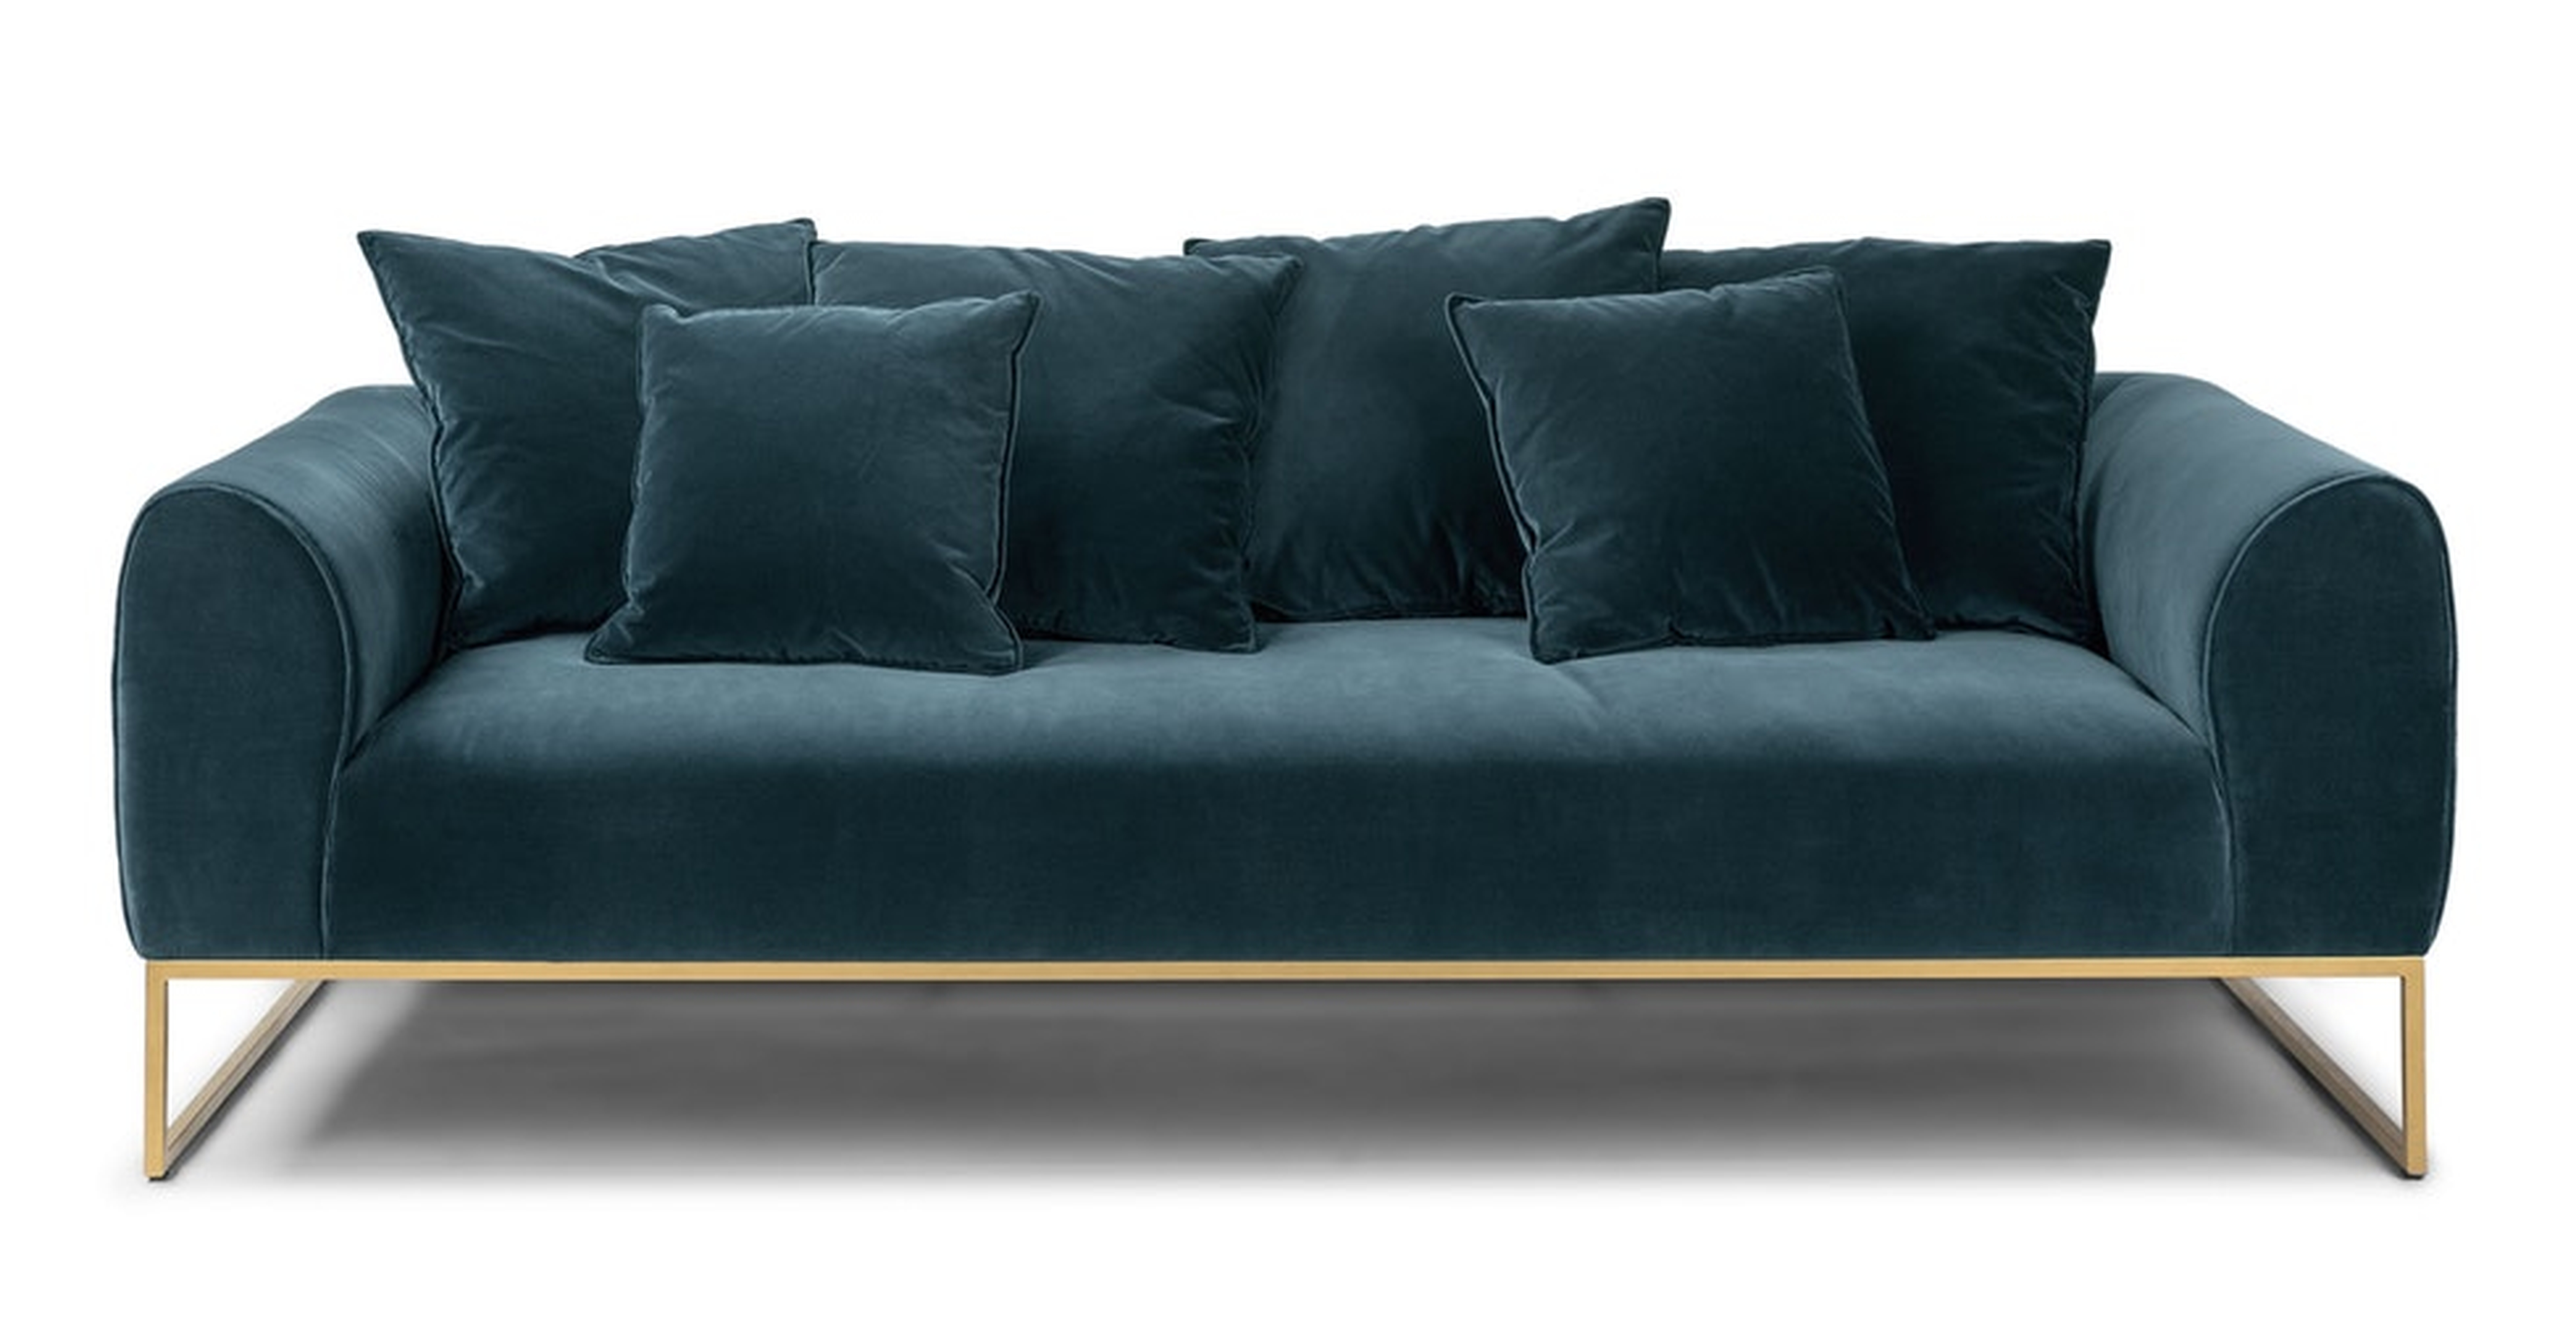 Kits Pacific Blue Sofa - Article